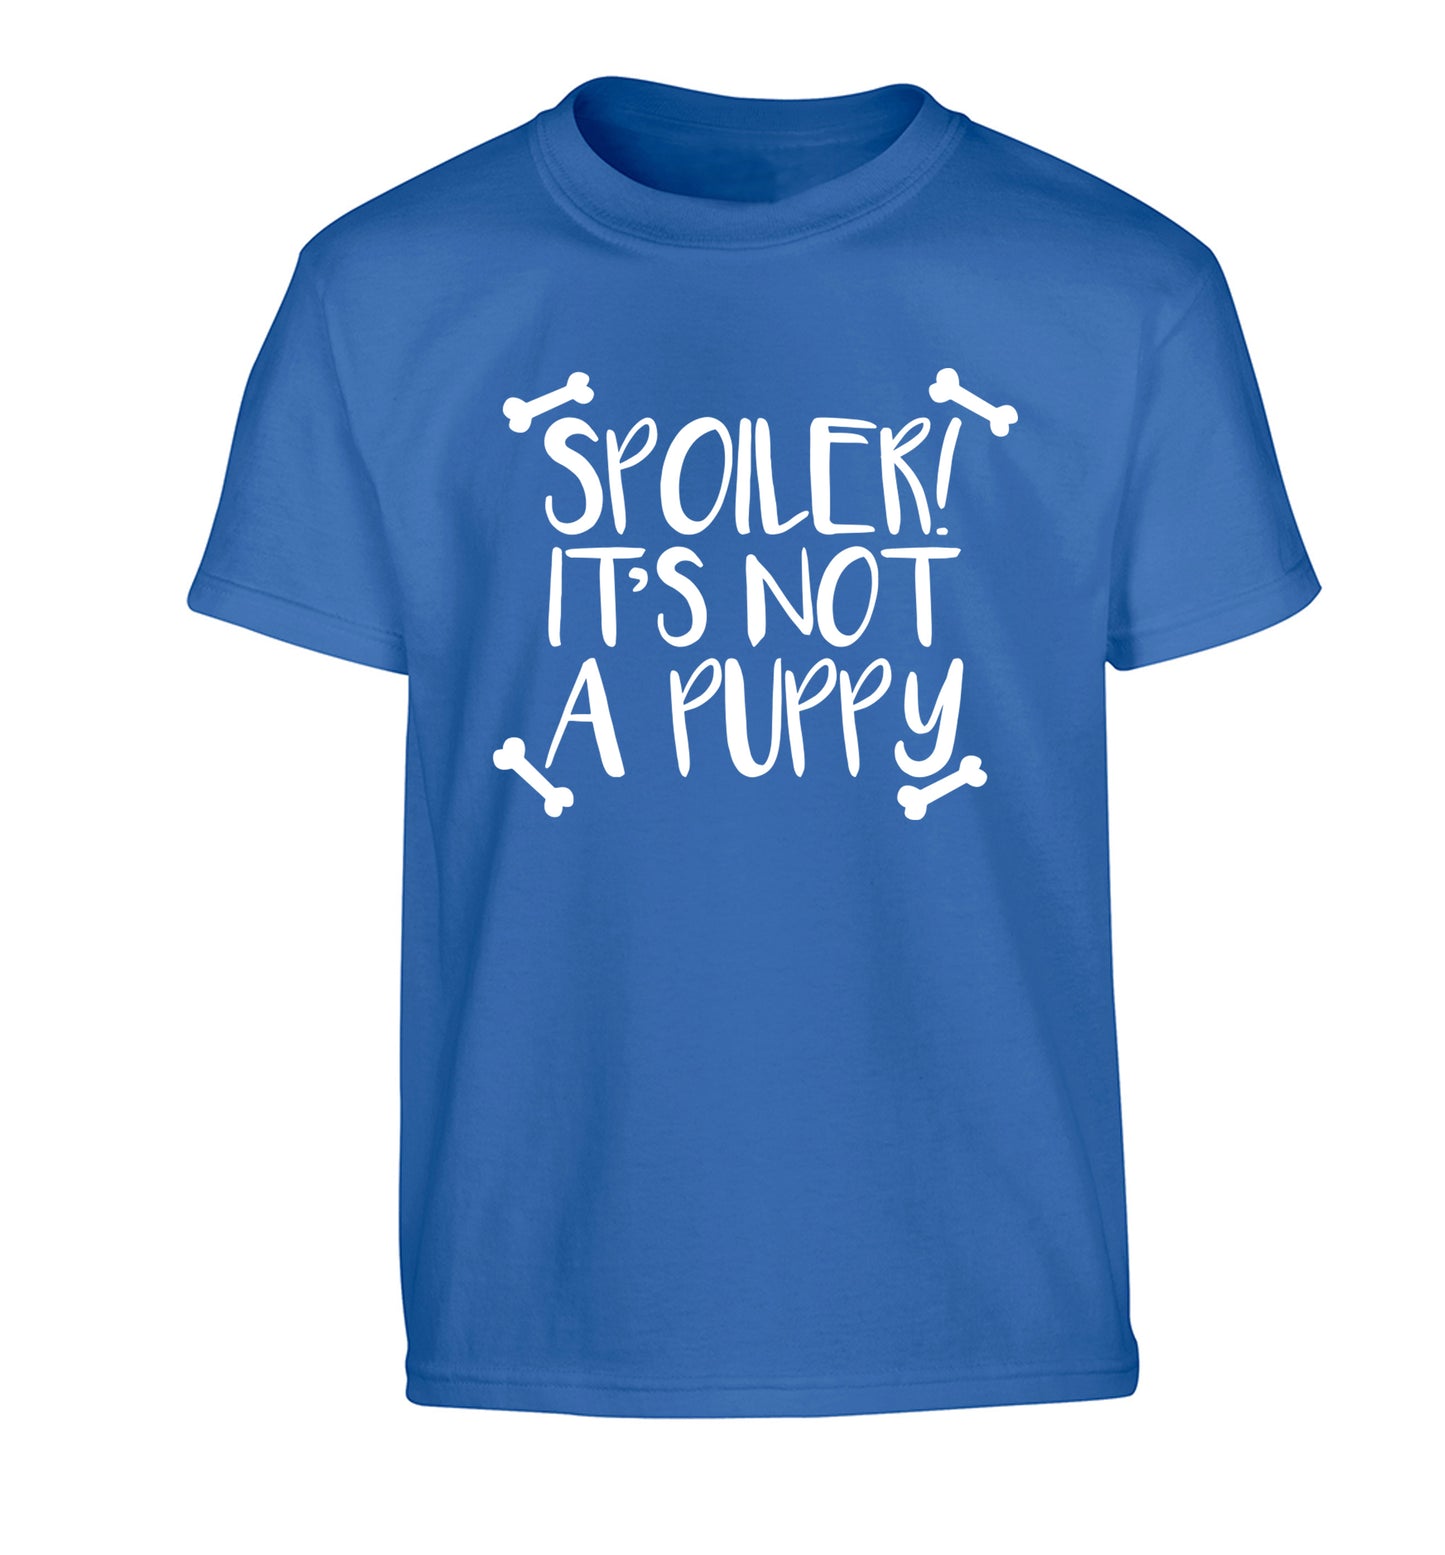 Spoiler it's not a puppy Children's blue Tshirt 12-13 Years